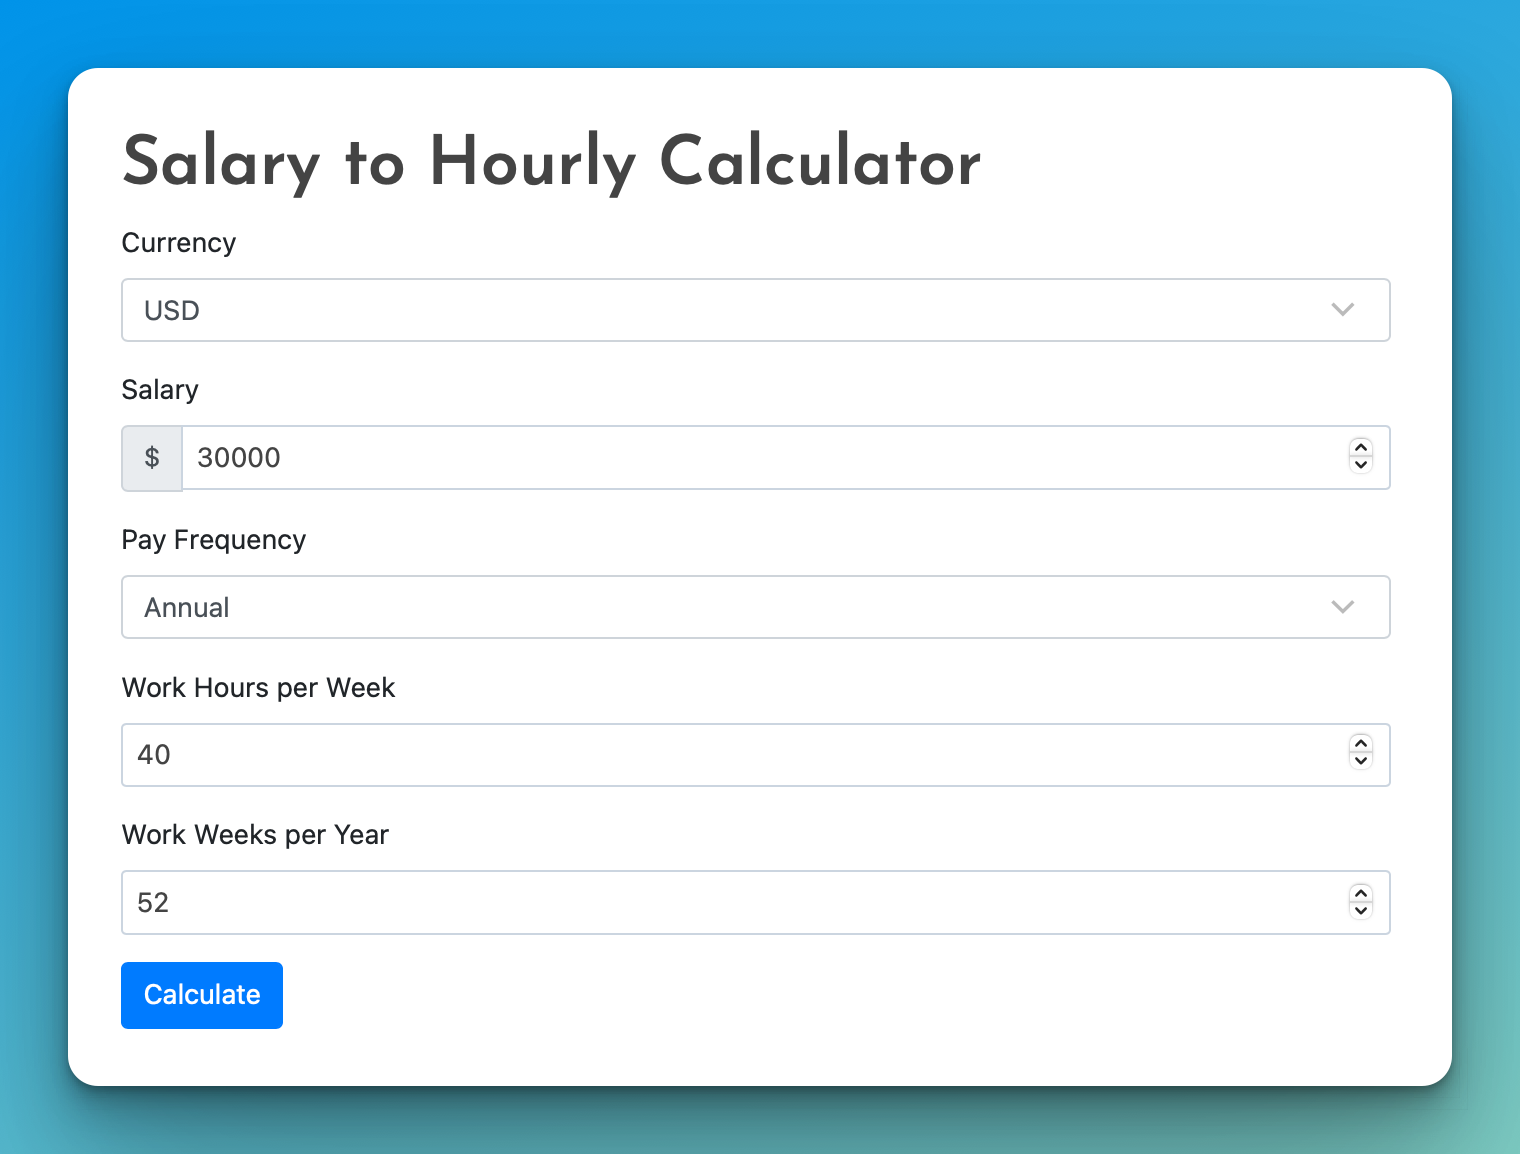 Salary to hourly calculator